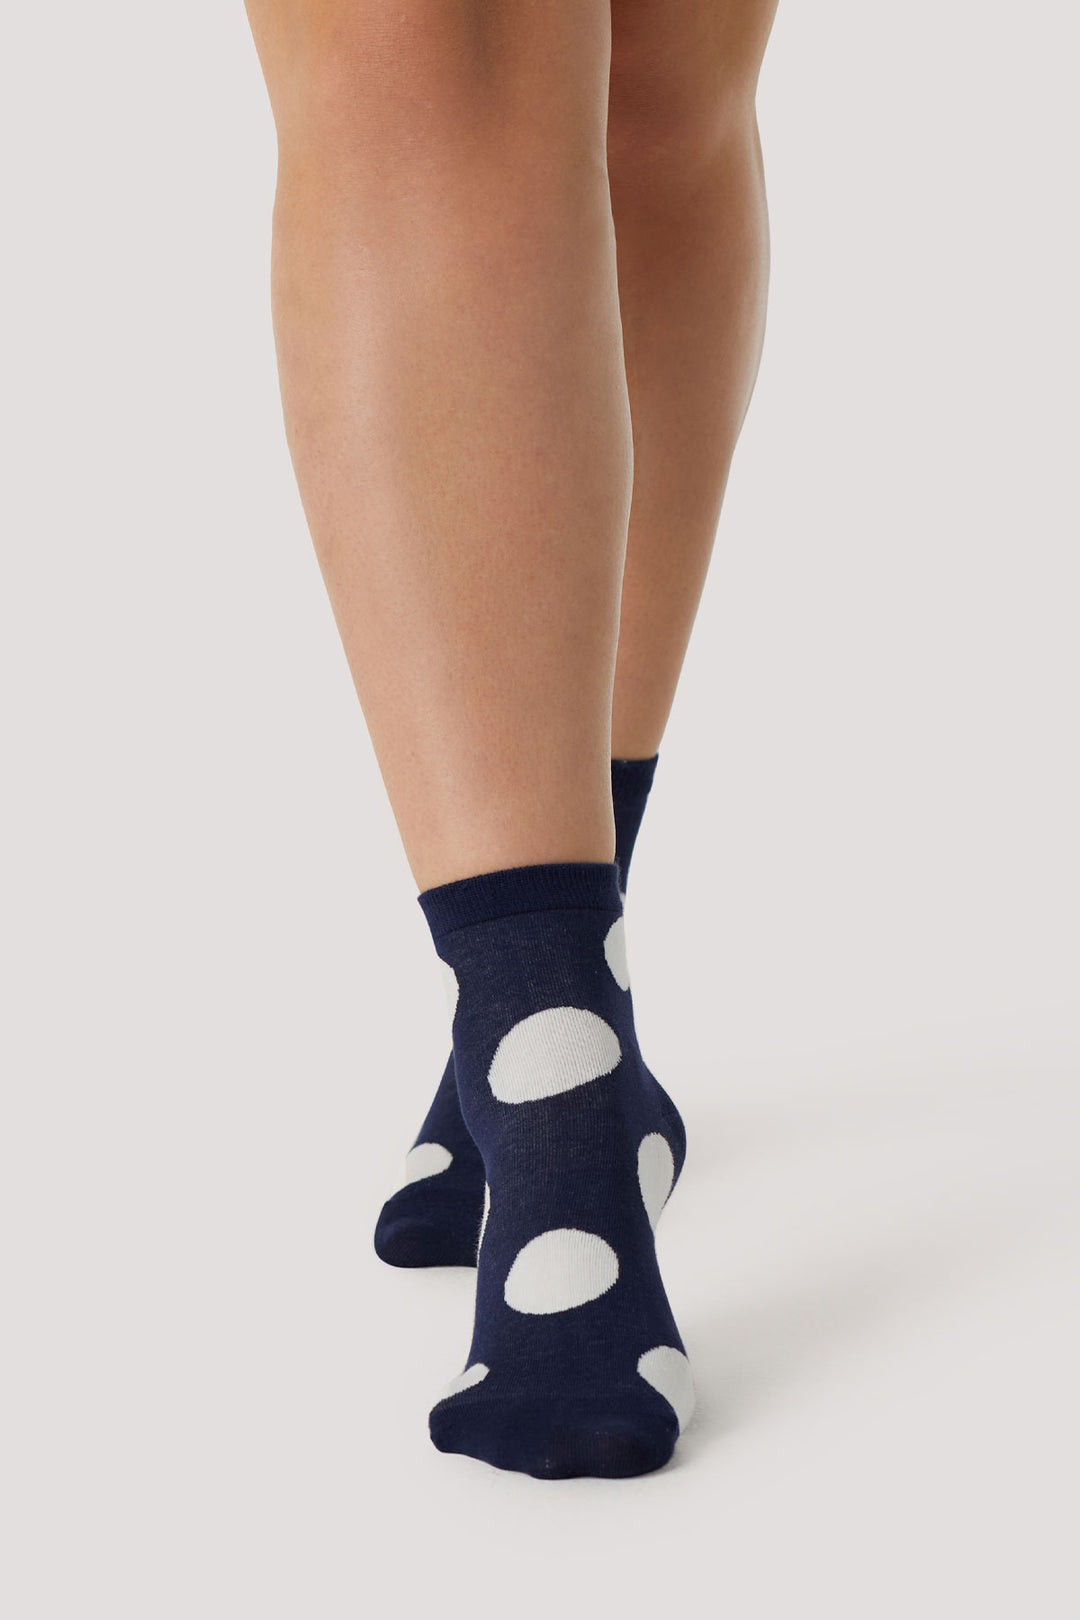 Women's Boot Socks | 2 pack | Bella Bodies Australia | Navy Polka Dots